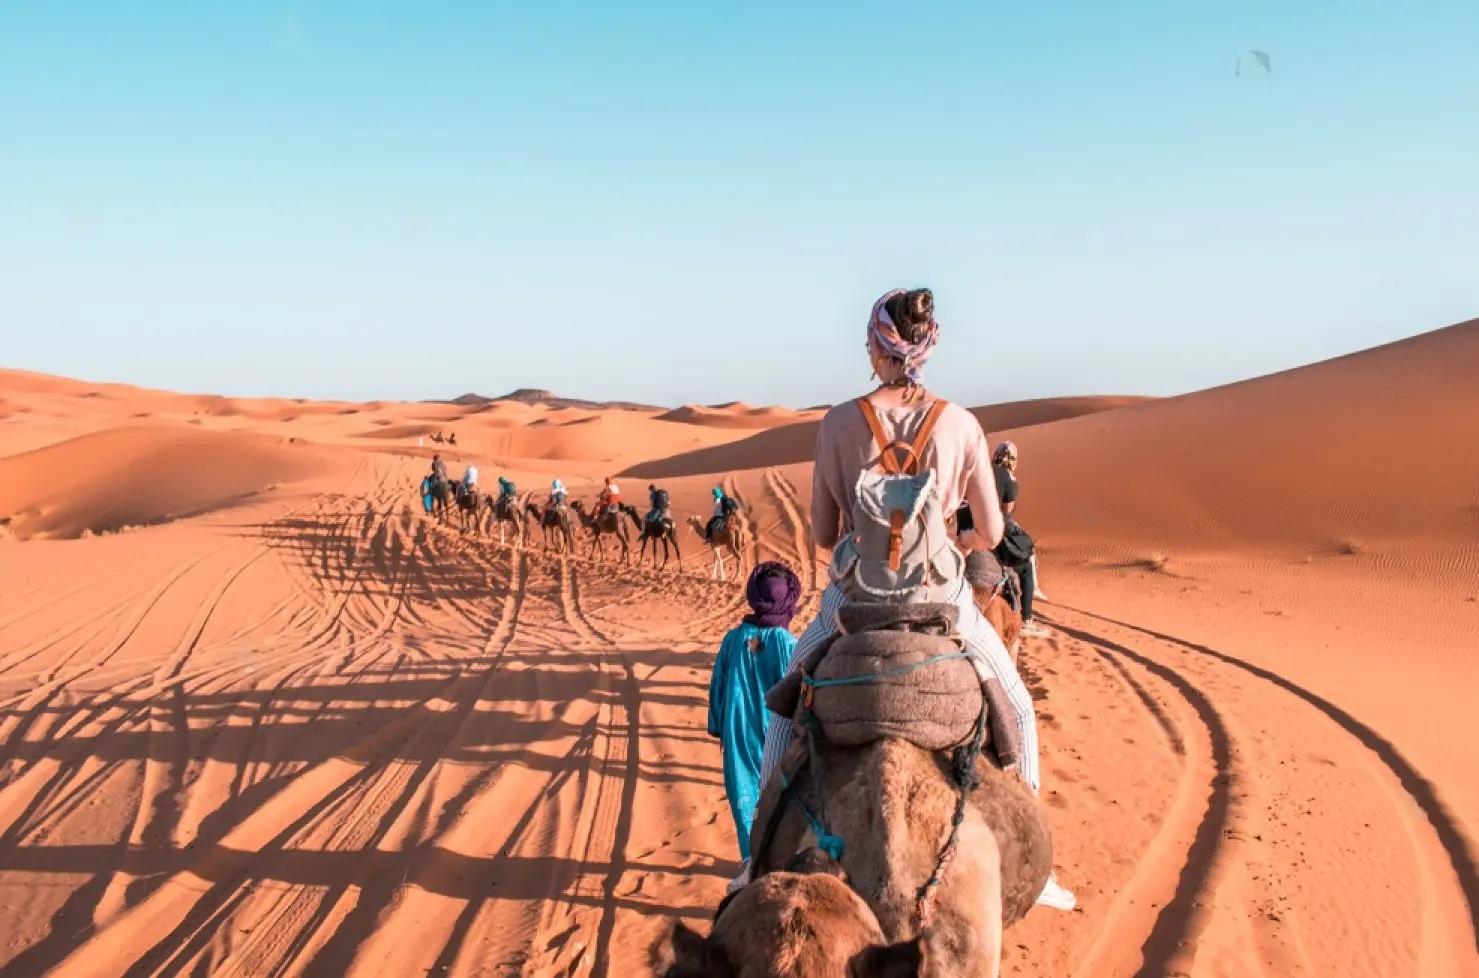 Day 5: Exploring Sahara Desert